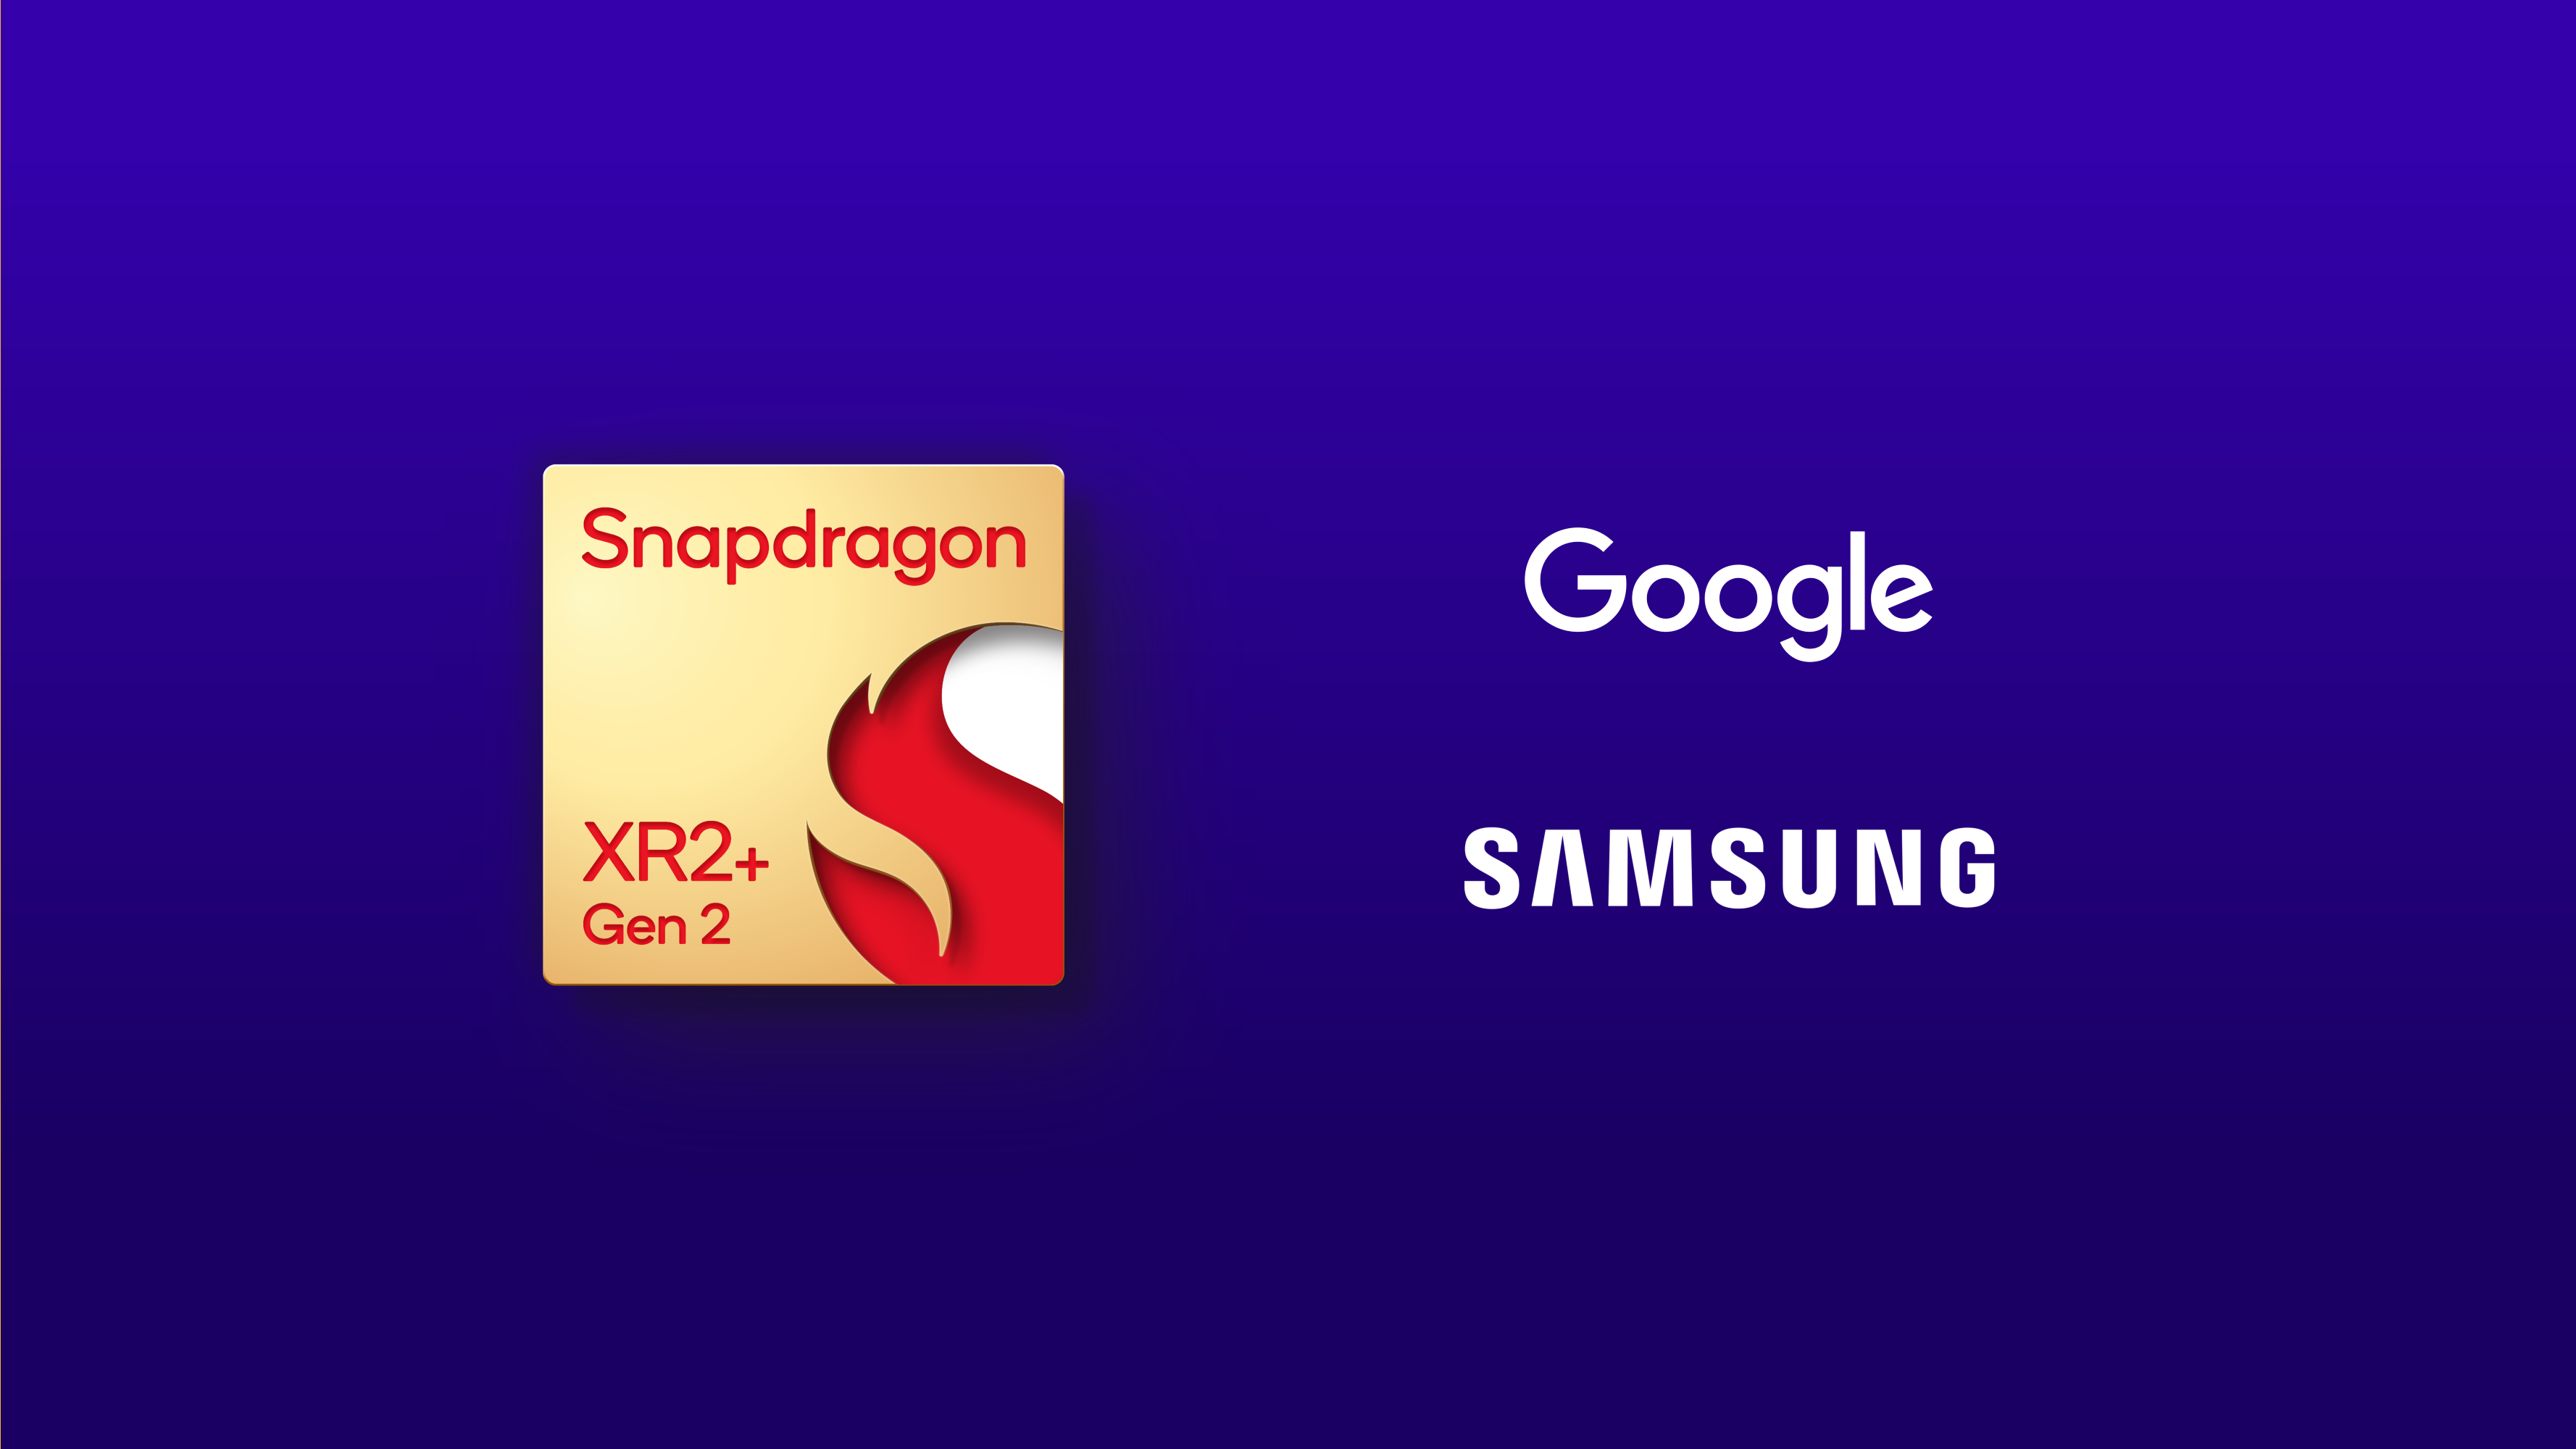 Snapdragon XR2+ Gen 2 Samsung and Google